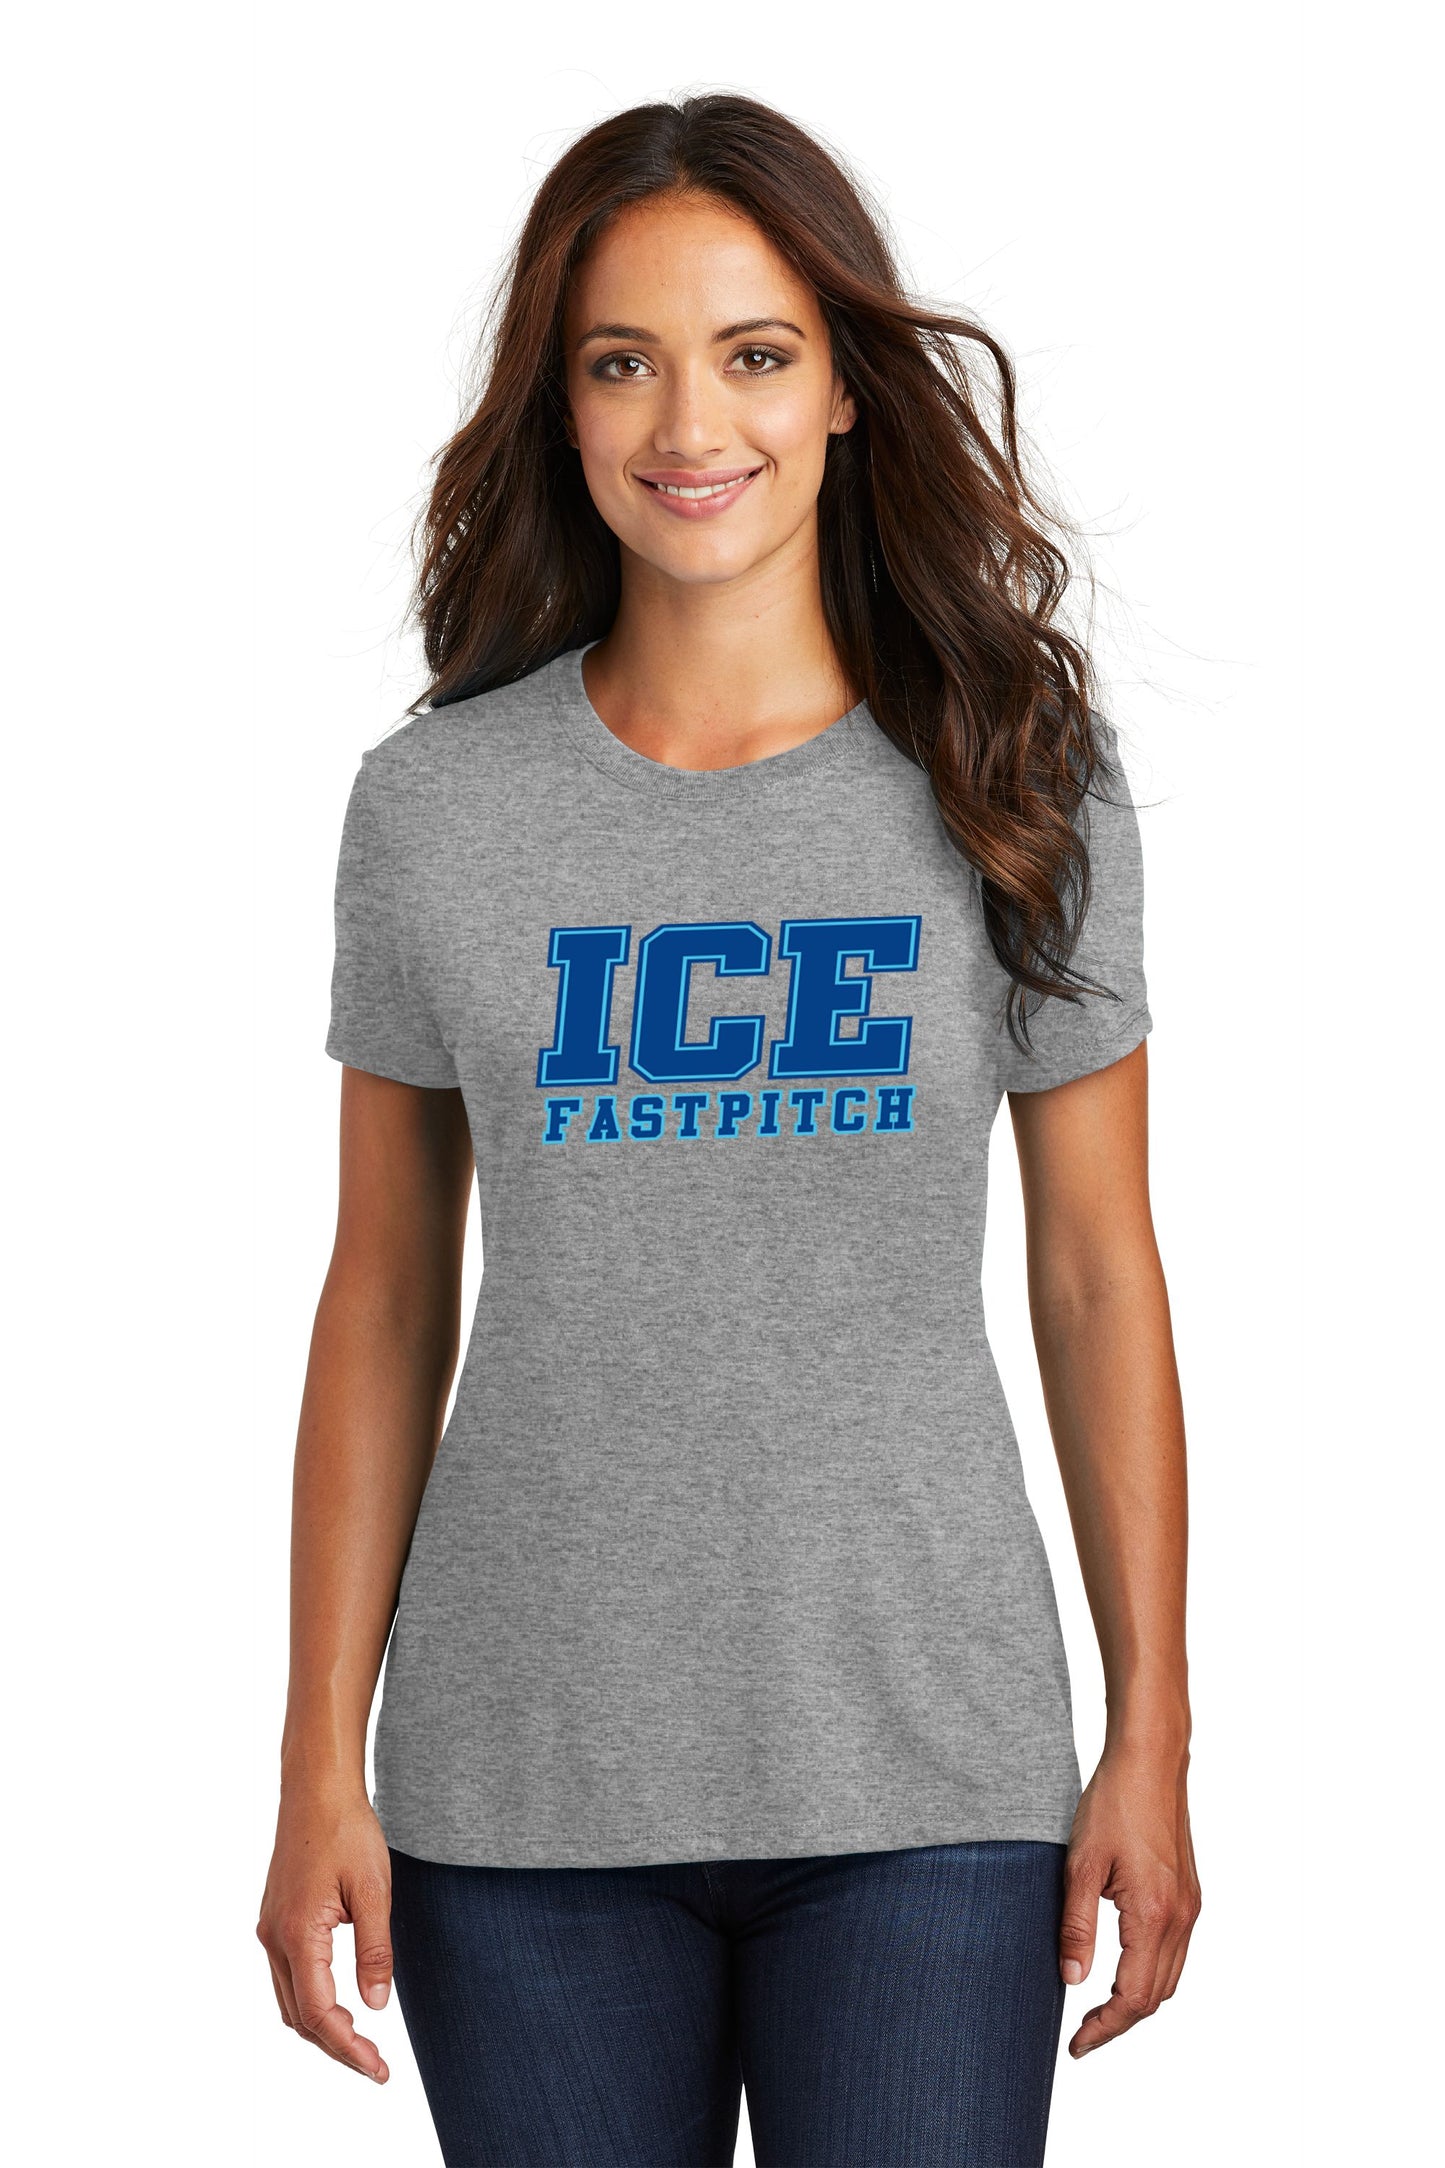 Ice Fastpitch Ladies Triblend T-shirt